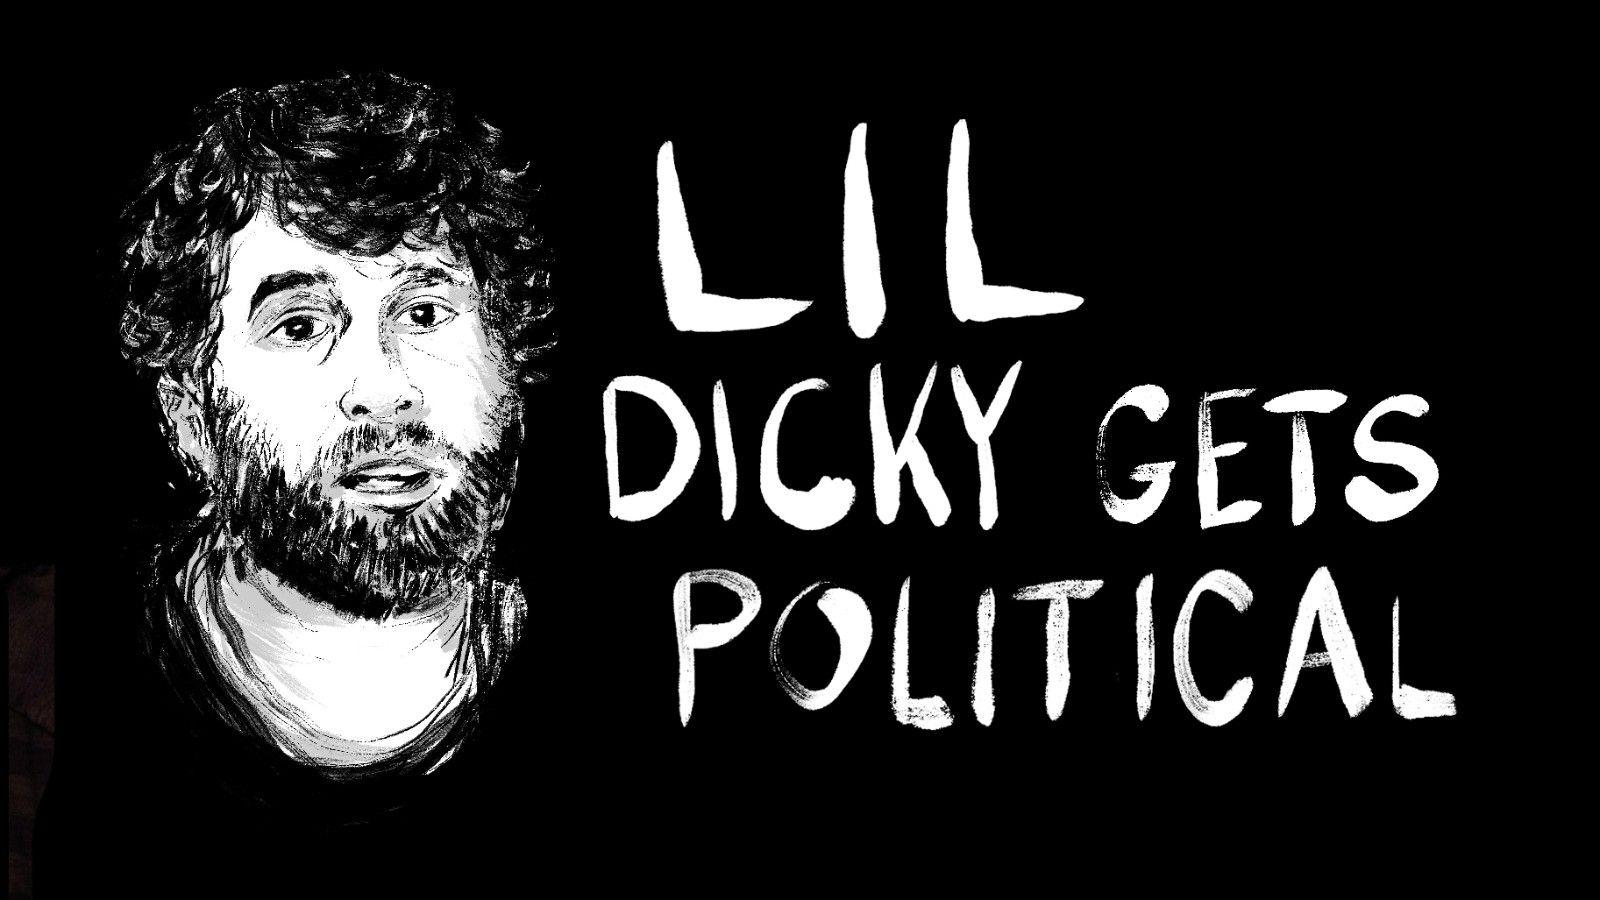 Lil dick. Lil Dicky. Little dick. Dick logo. Big dick logo.